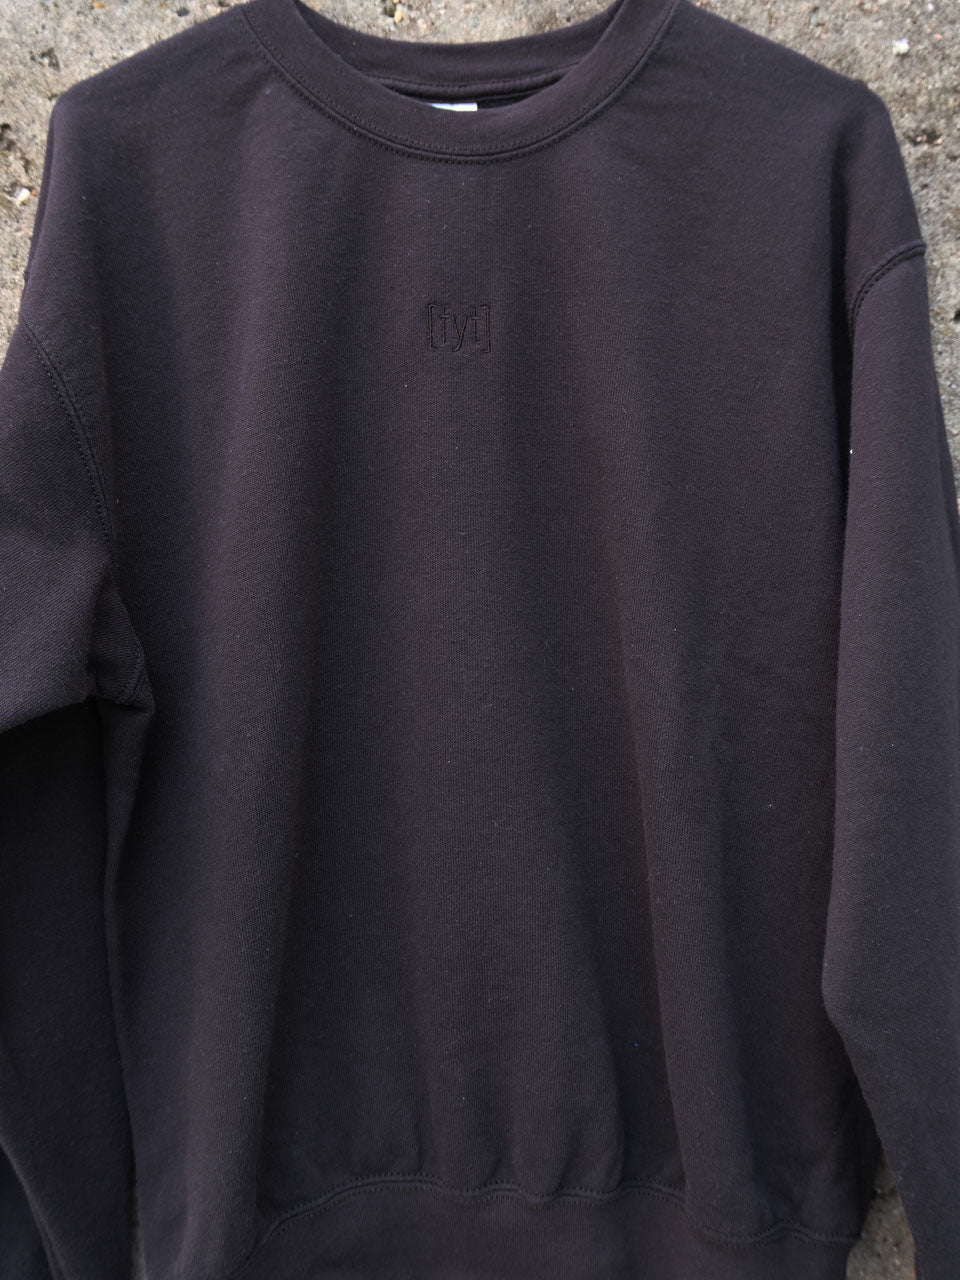 FYT logo sweatshirt black